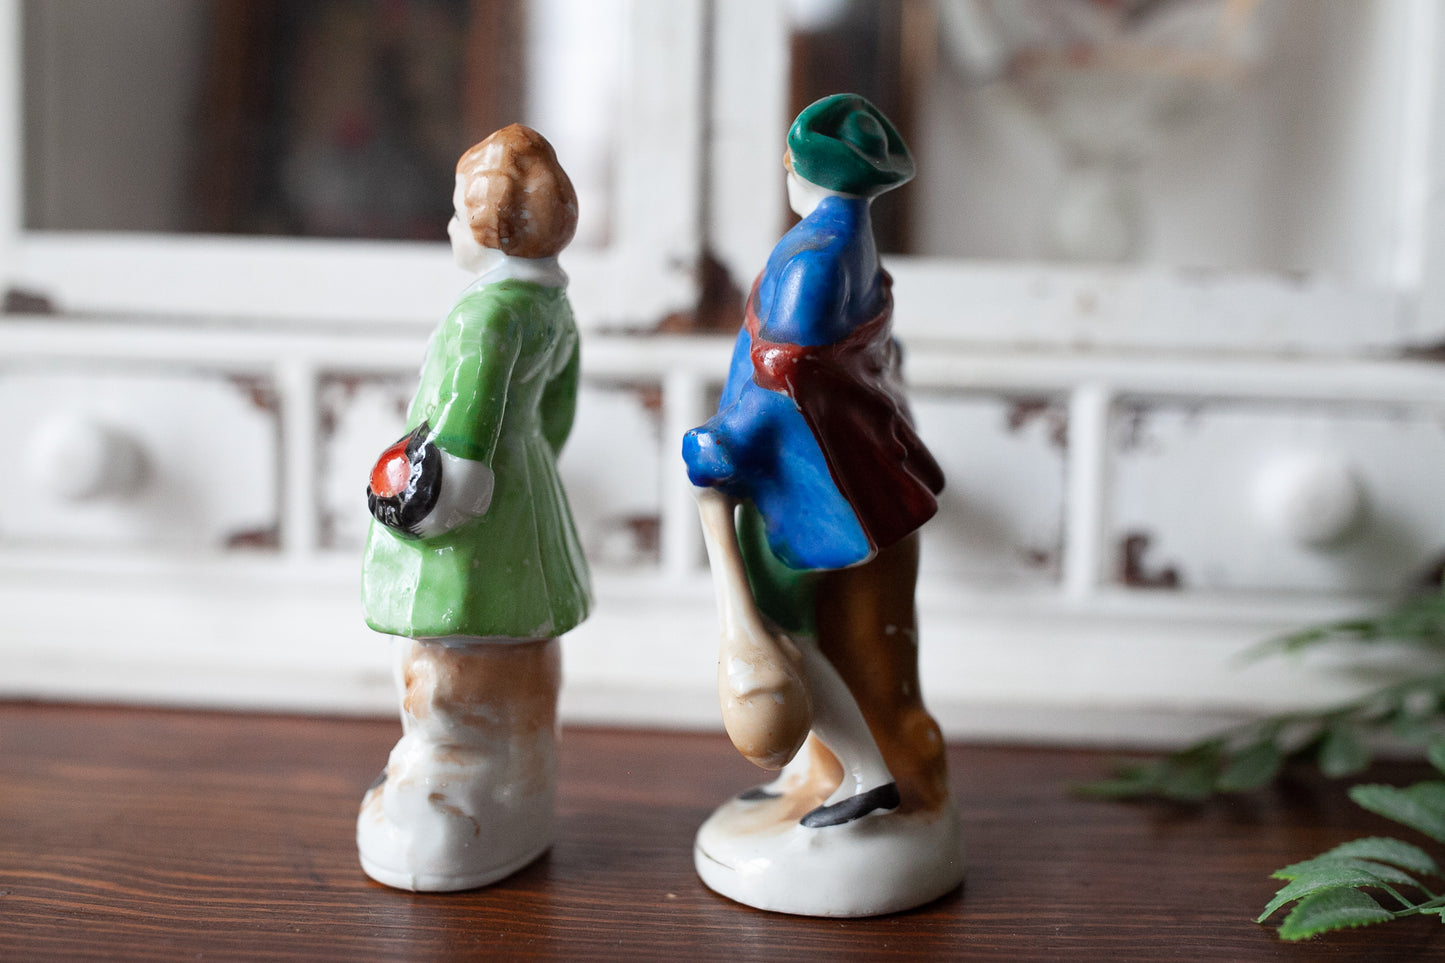 Vintage Occupied Japan Figurines - Porcelain Figurines